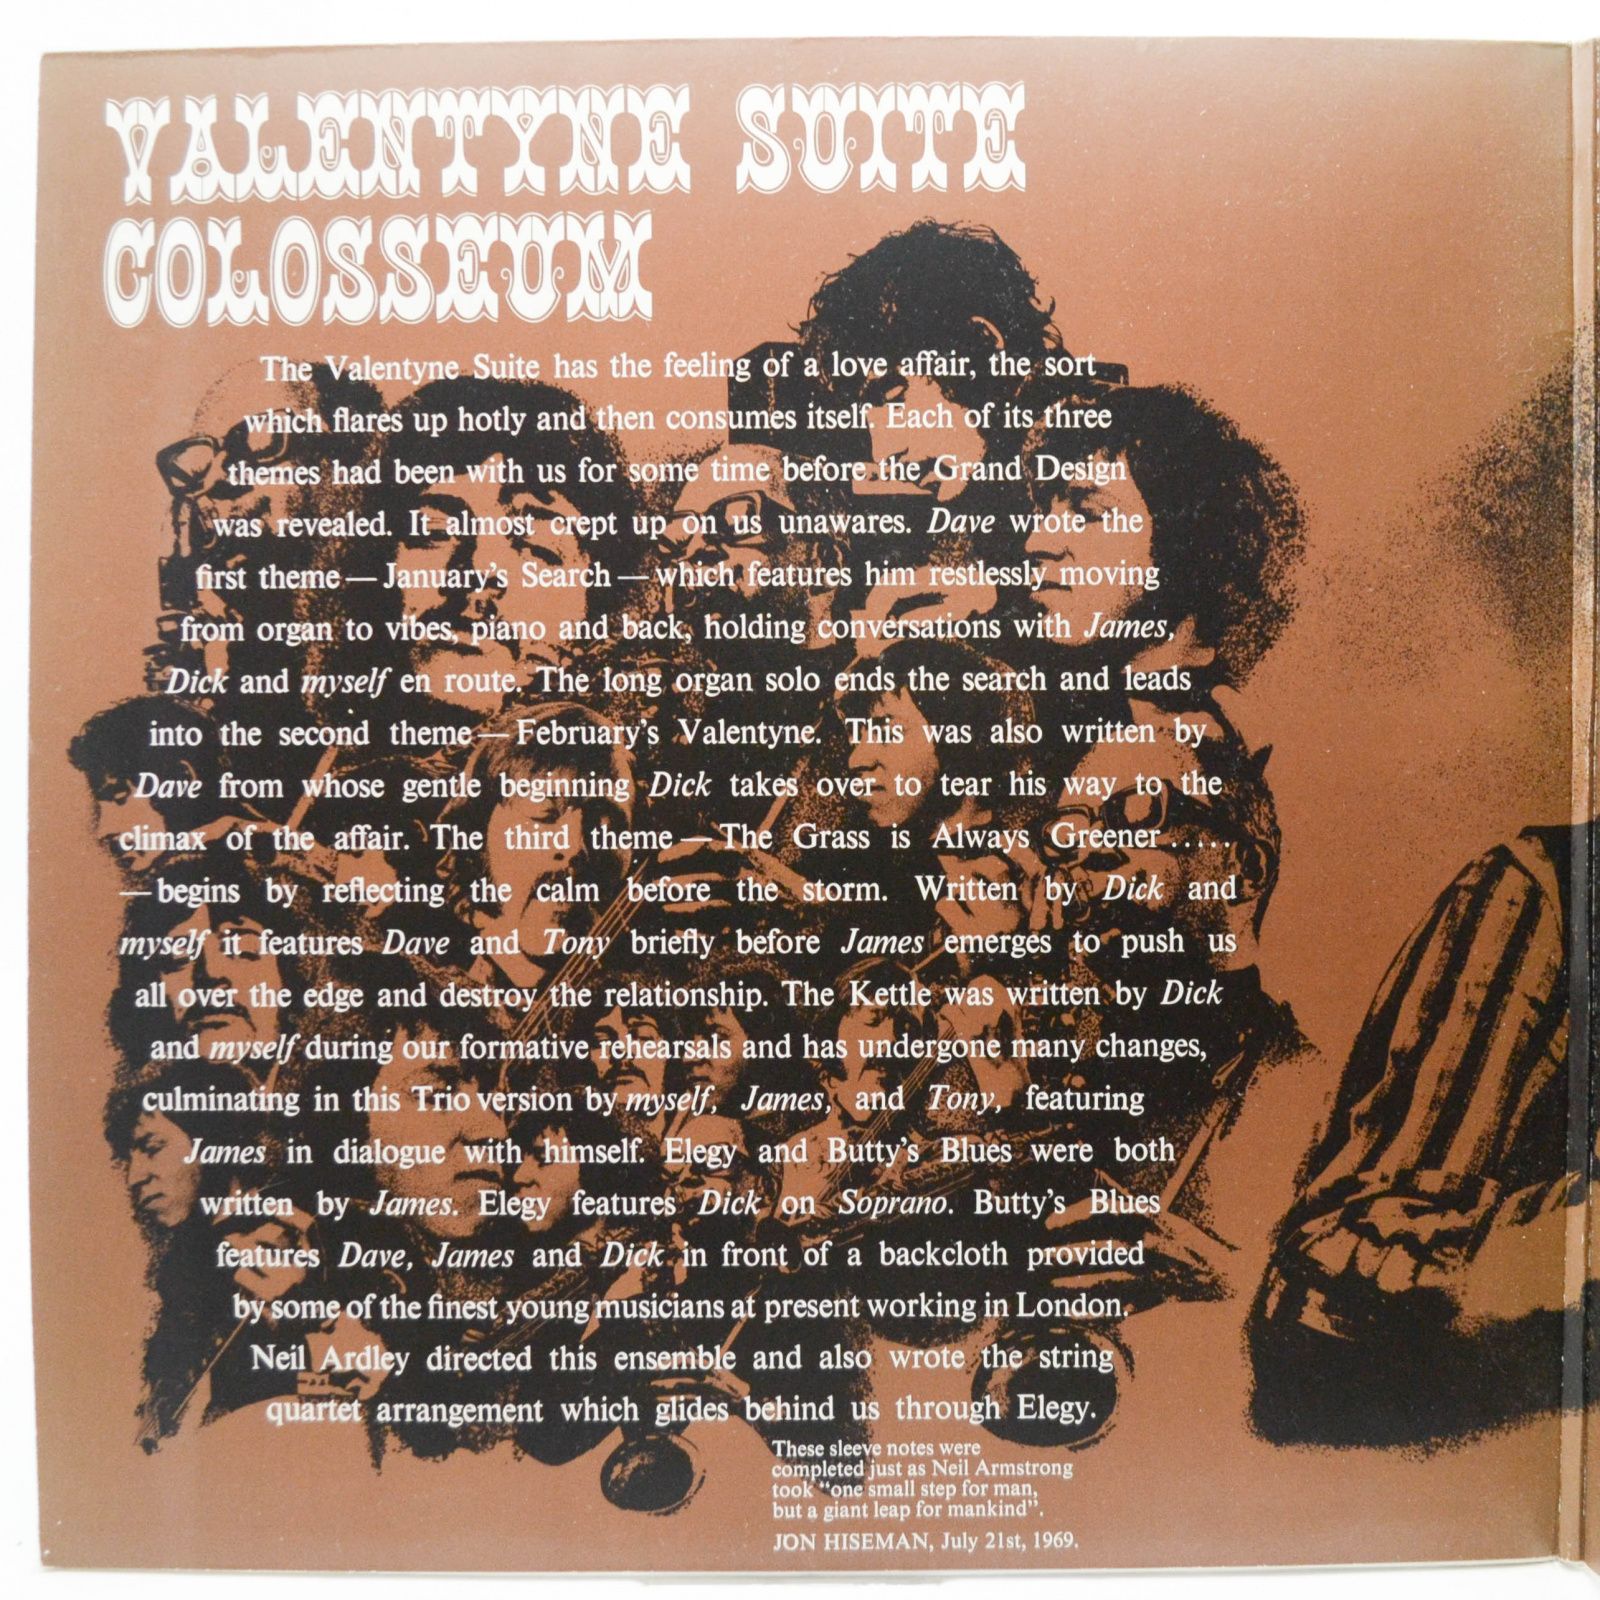 Colosseum — Valentyne Suite, 1969